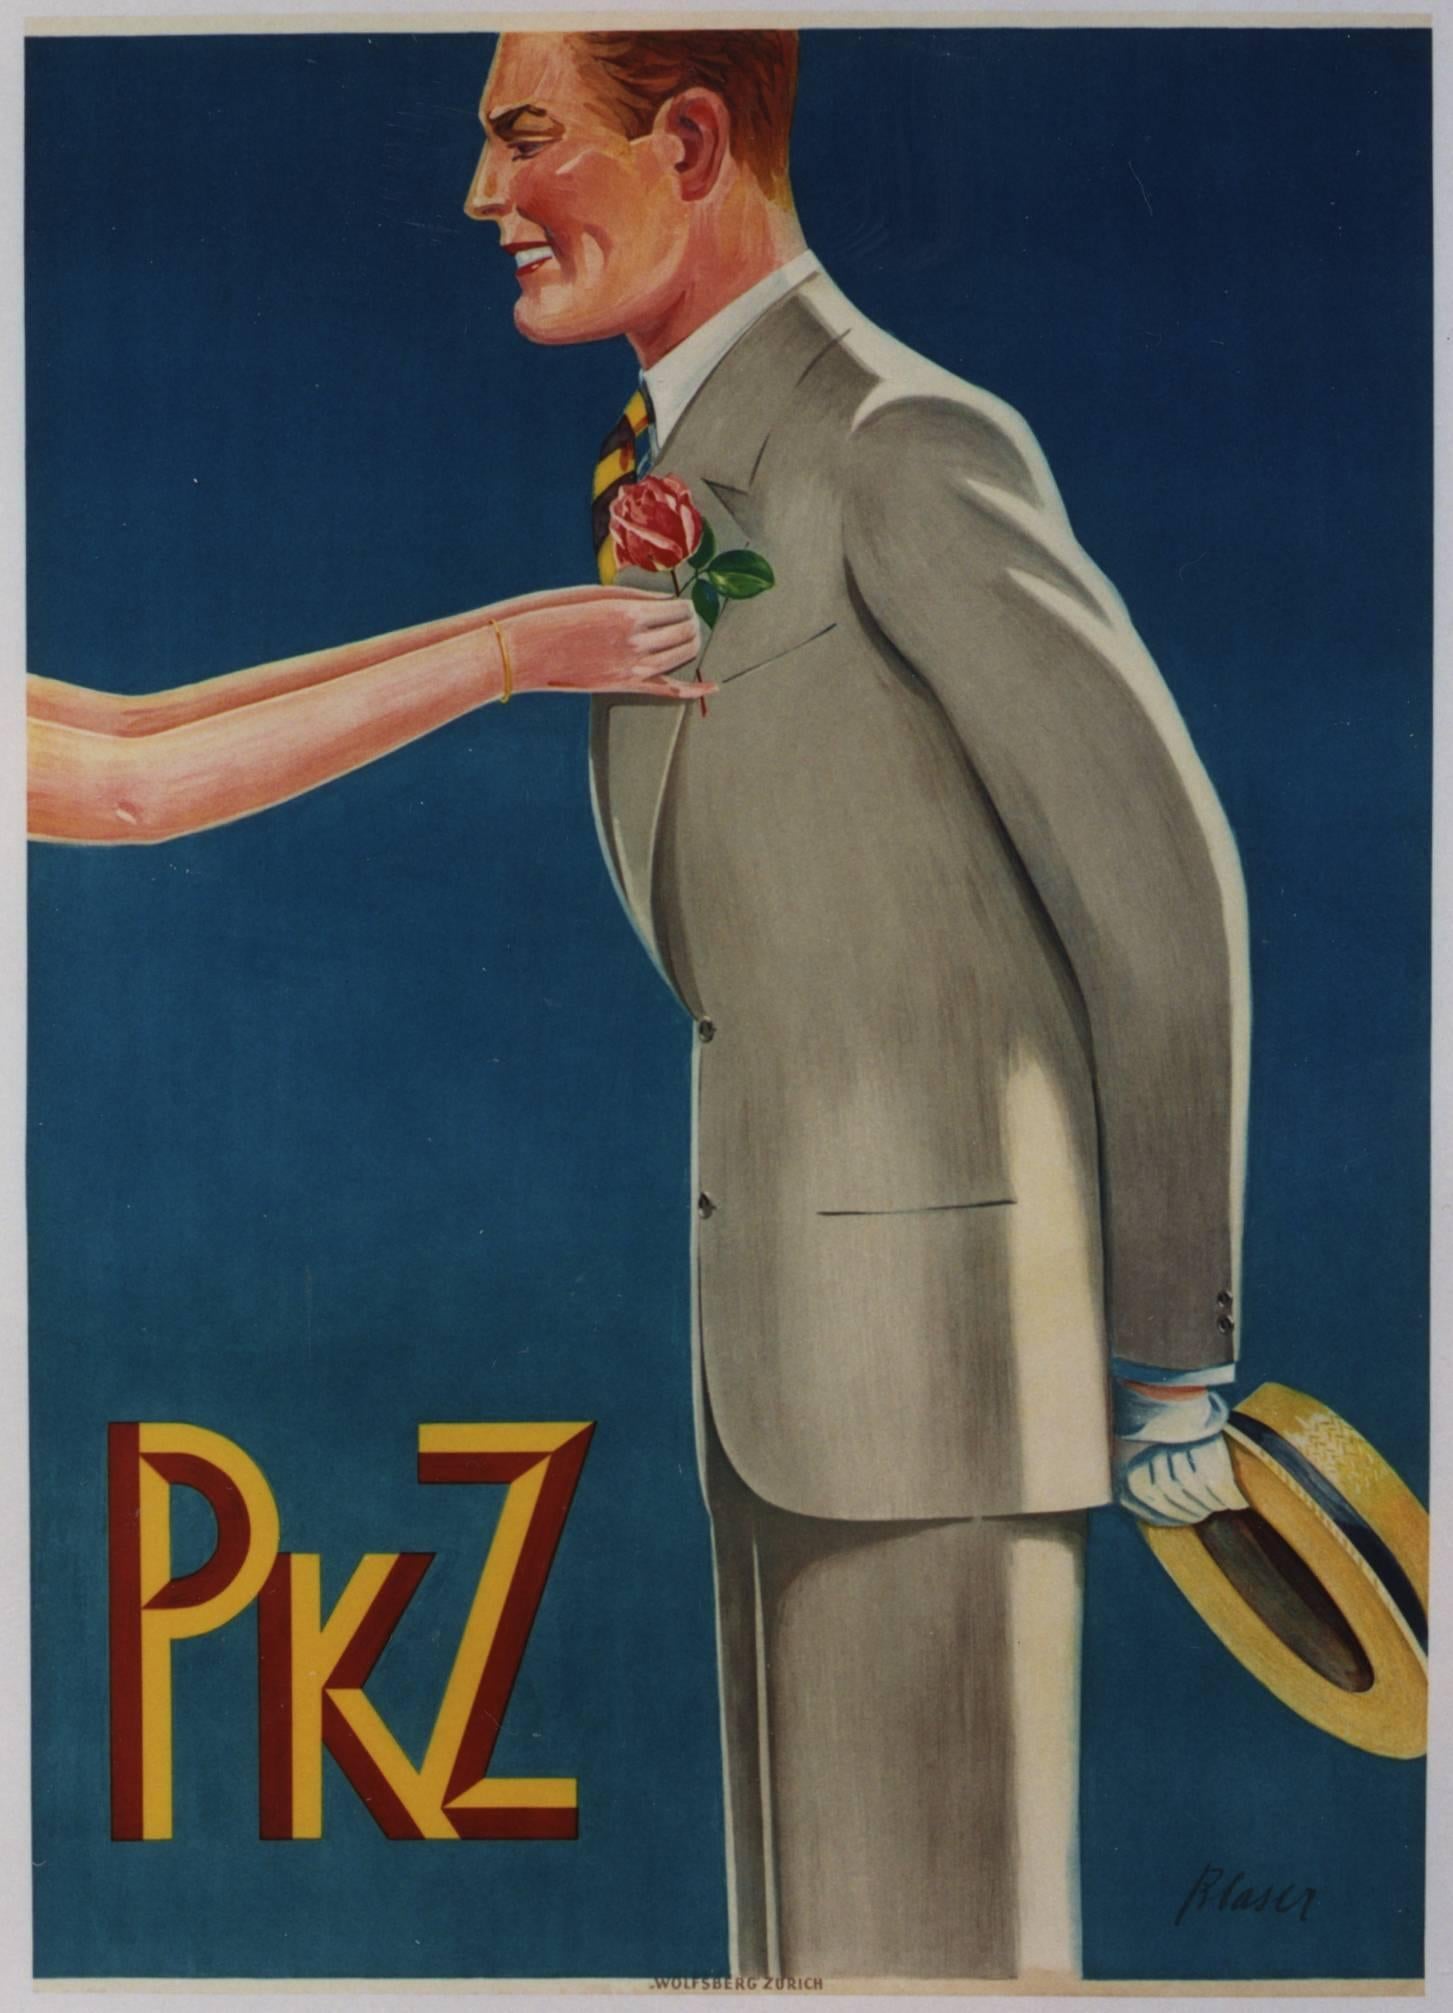 PKZ [Hand putting Rose into lapel of Suit].